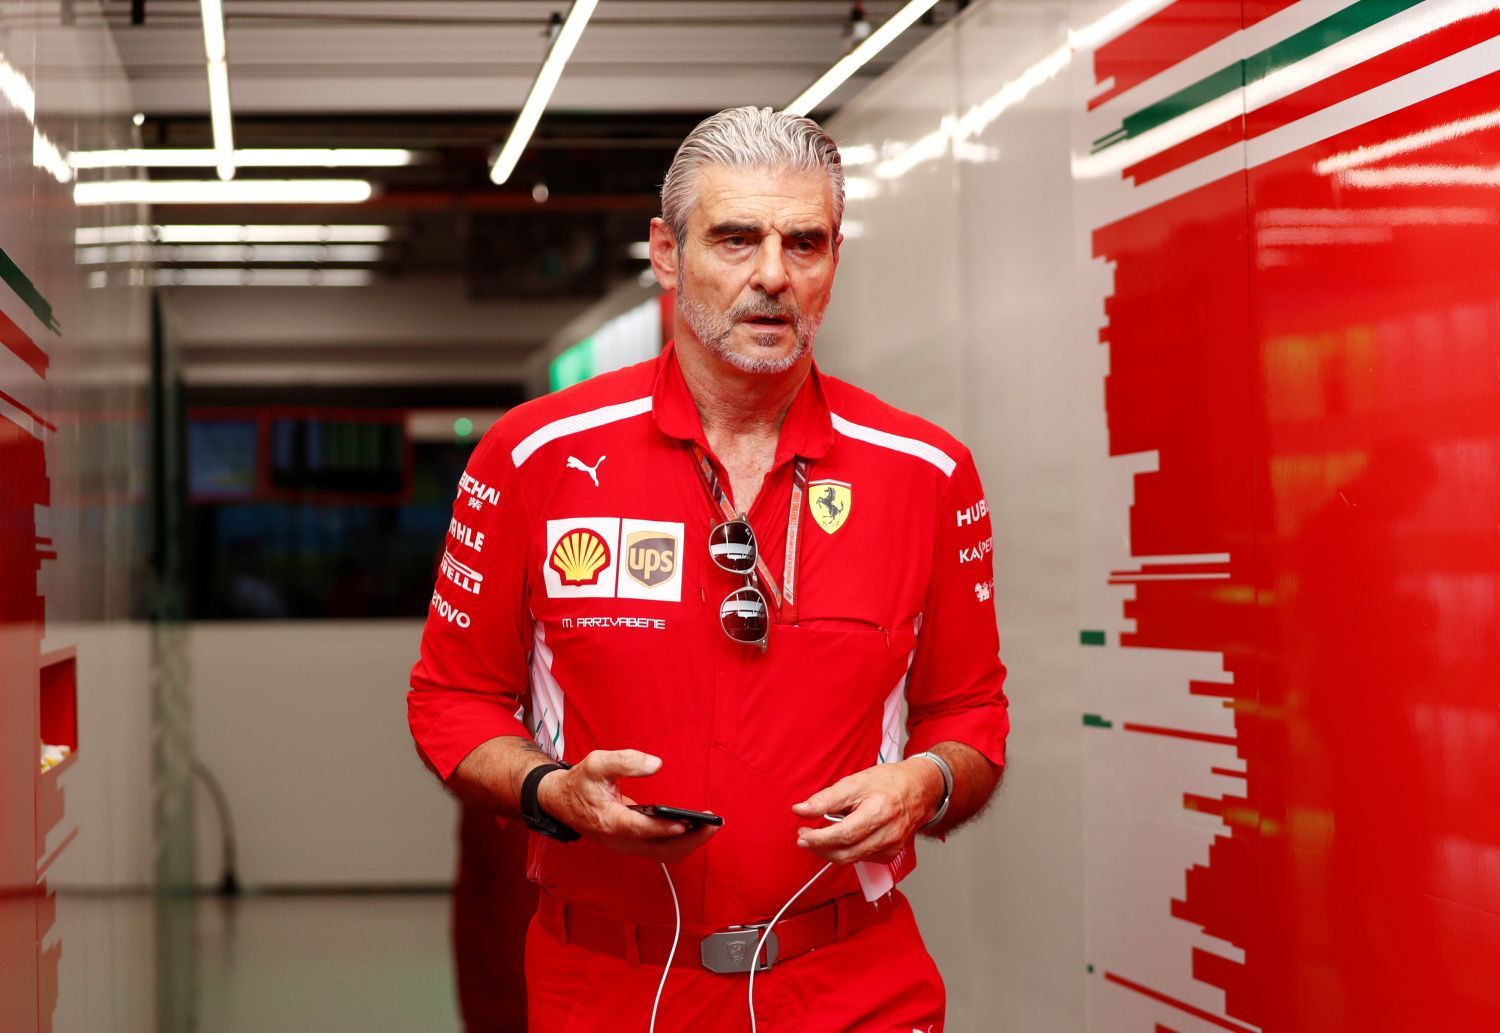 F1, VC Singapuru 2018: Maurizio Arrivabene, šéf týmu Ferrari